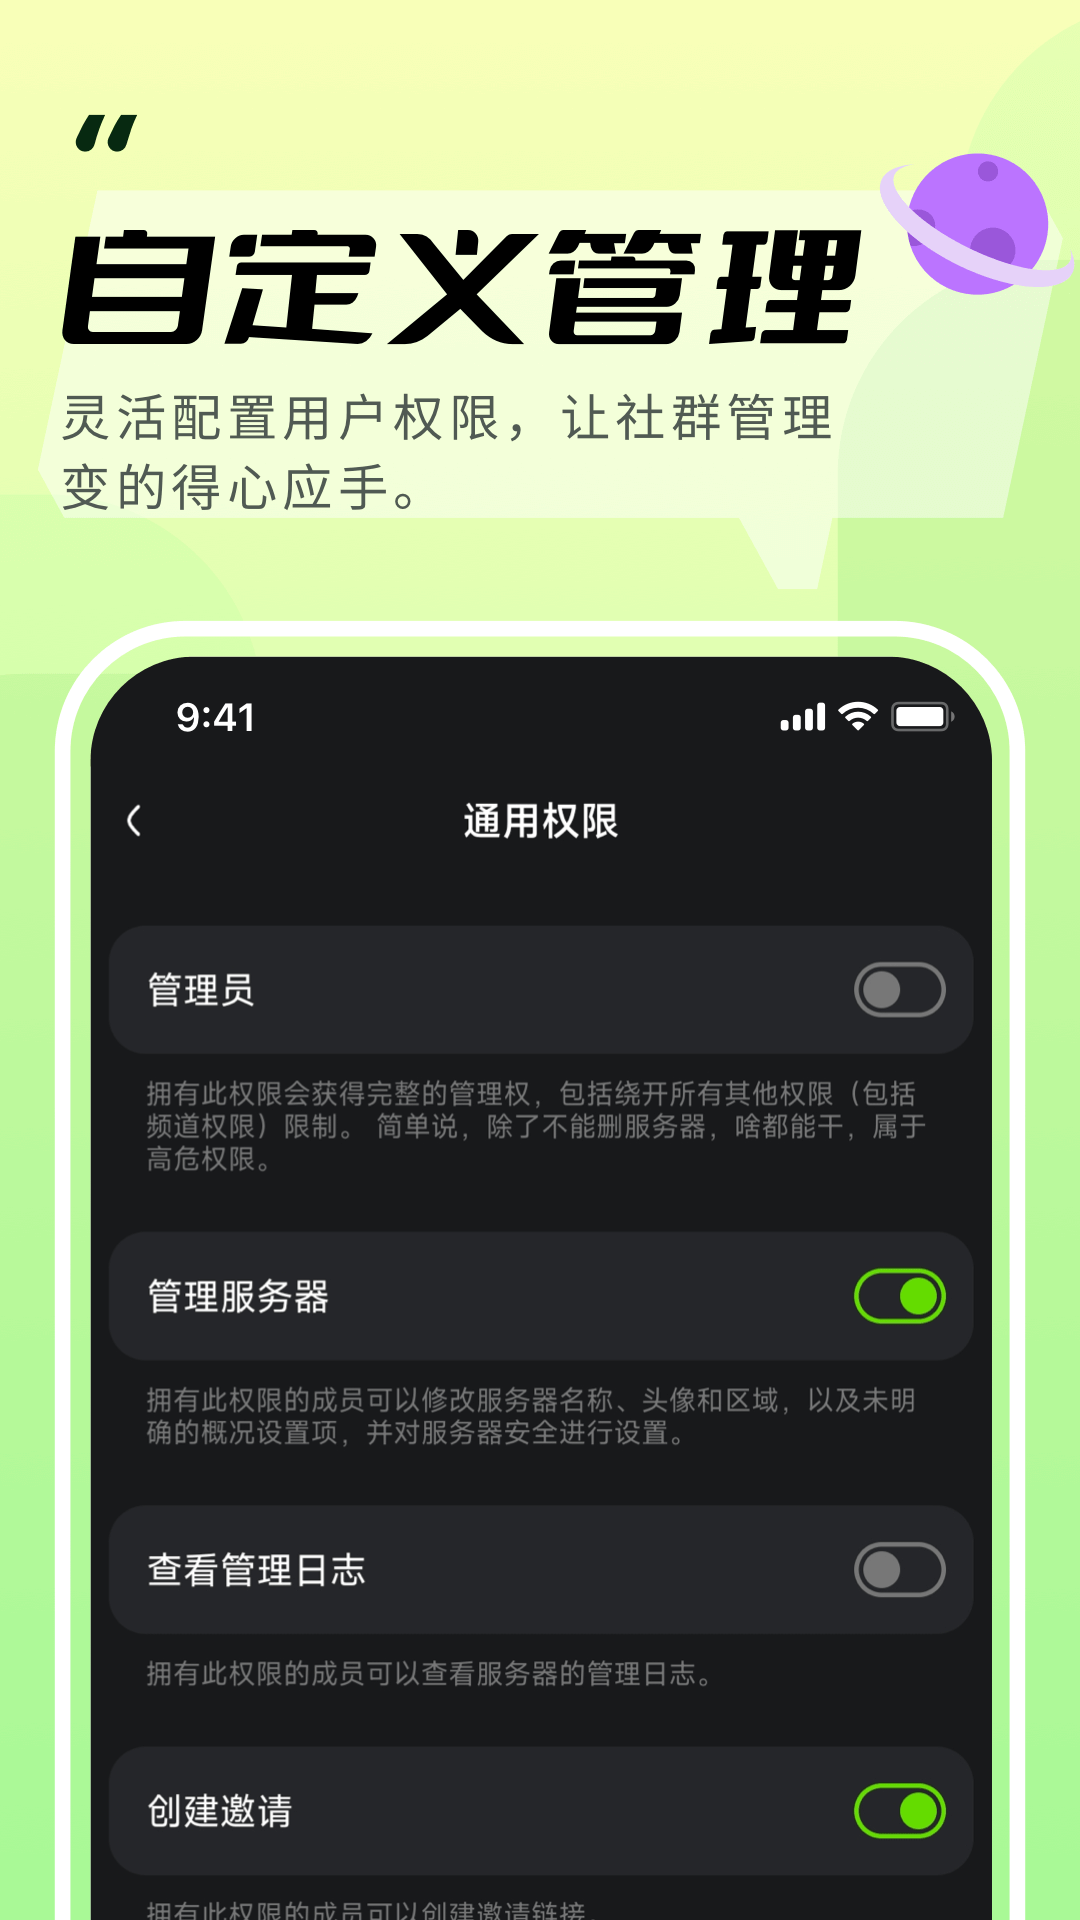 KOOK语音官网版网址下载手机软件app截图